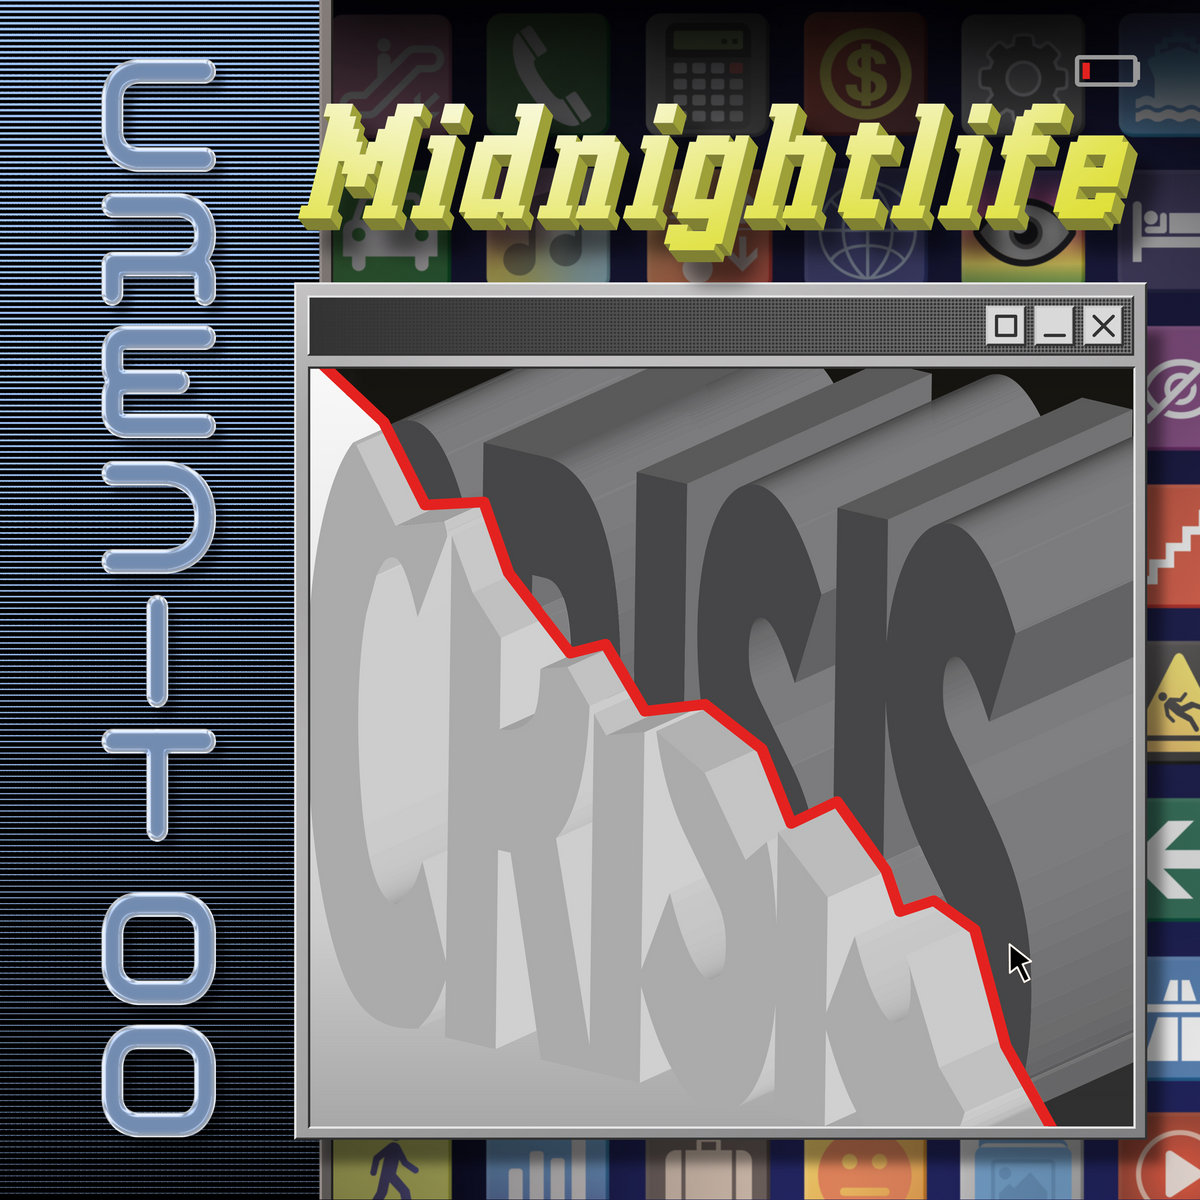 Credit 00 – Midnightlife Crisis